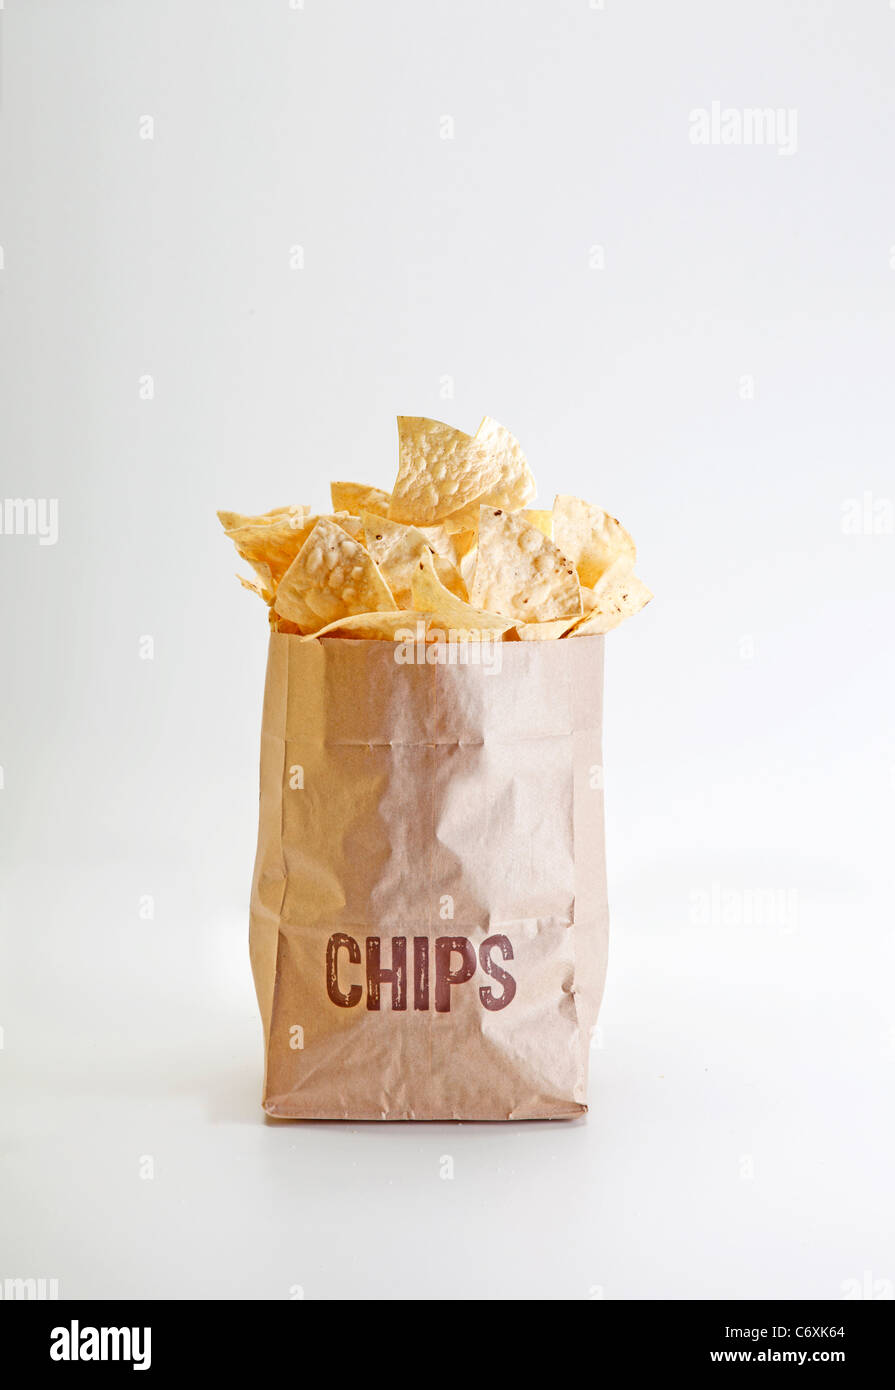 Bolsa de Chipotle restaurante marca chips Foto de stock